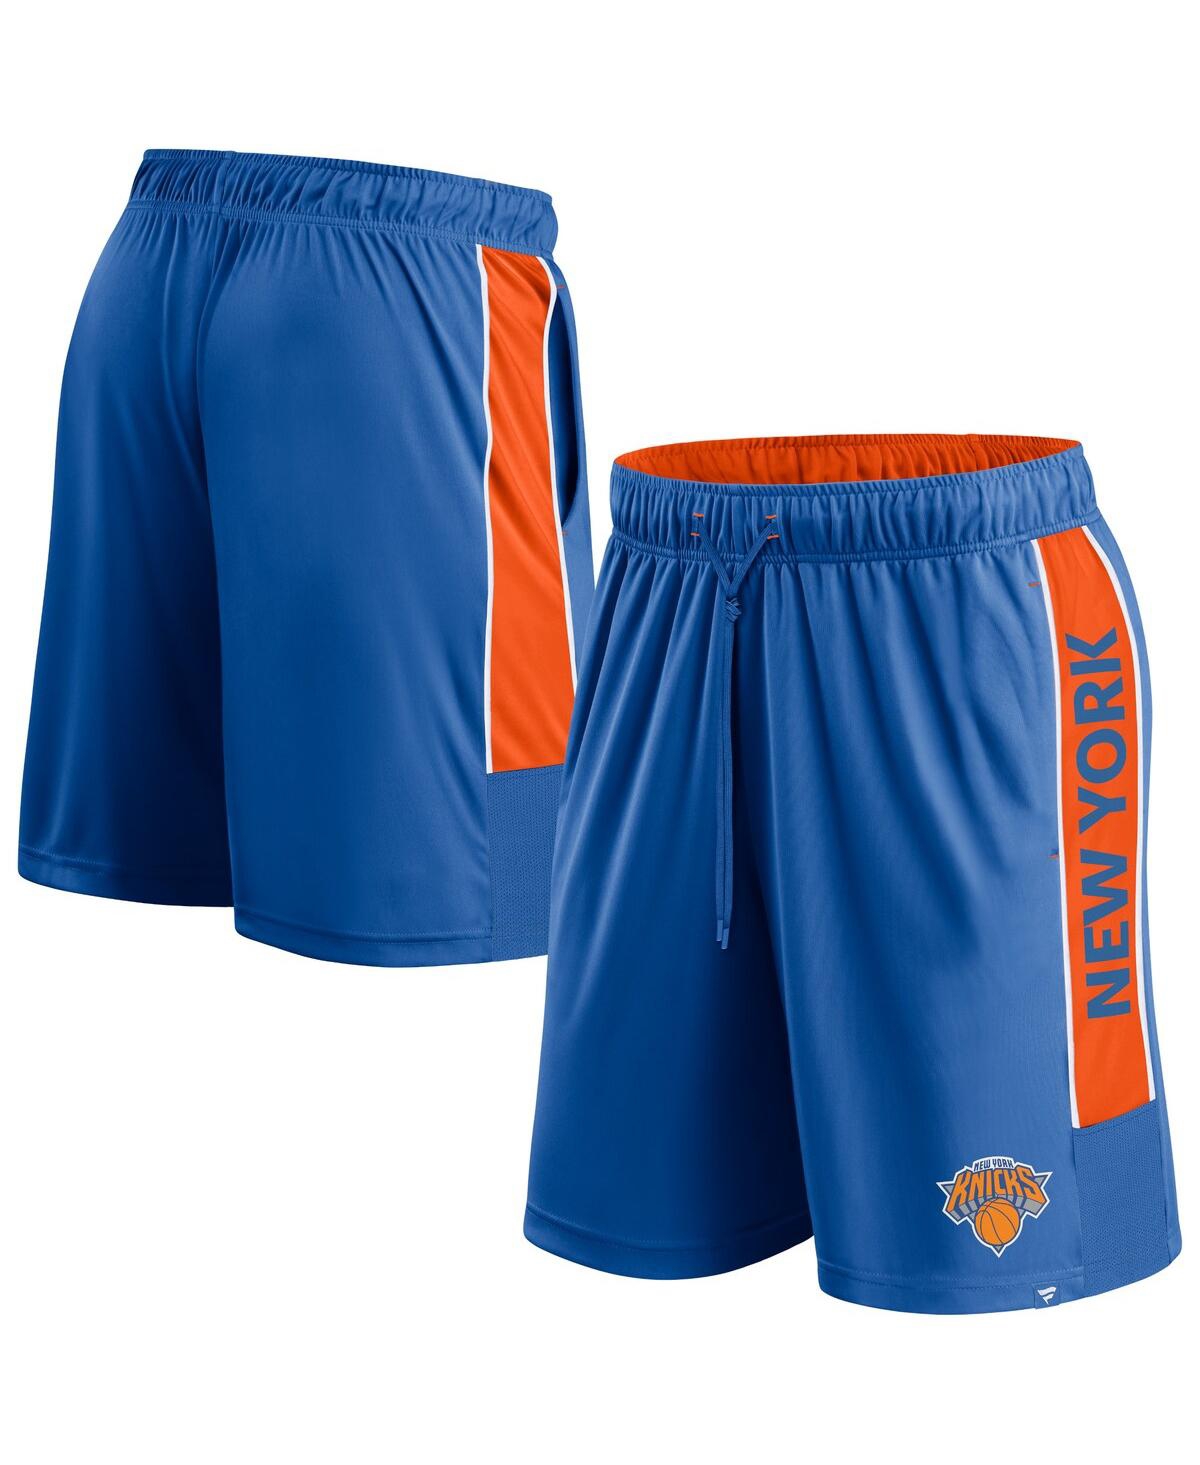 Shop Fanatics Men's Branded Blue New York Knicks Game Winner Defender Shorts